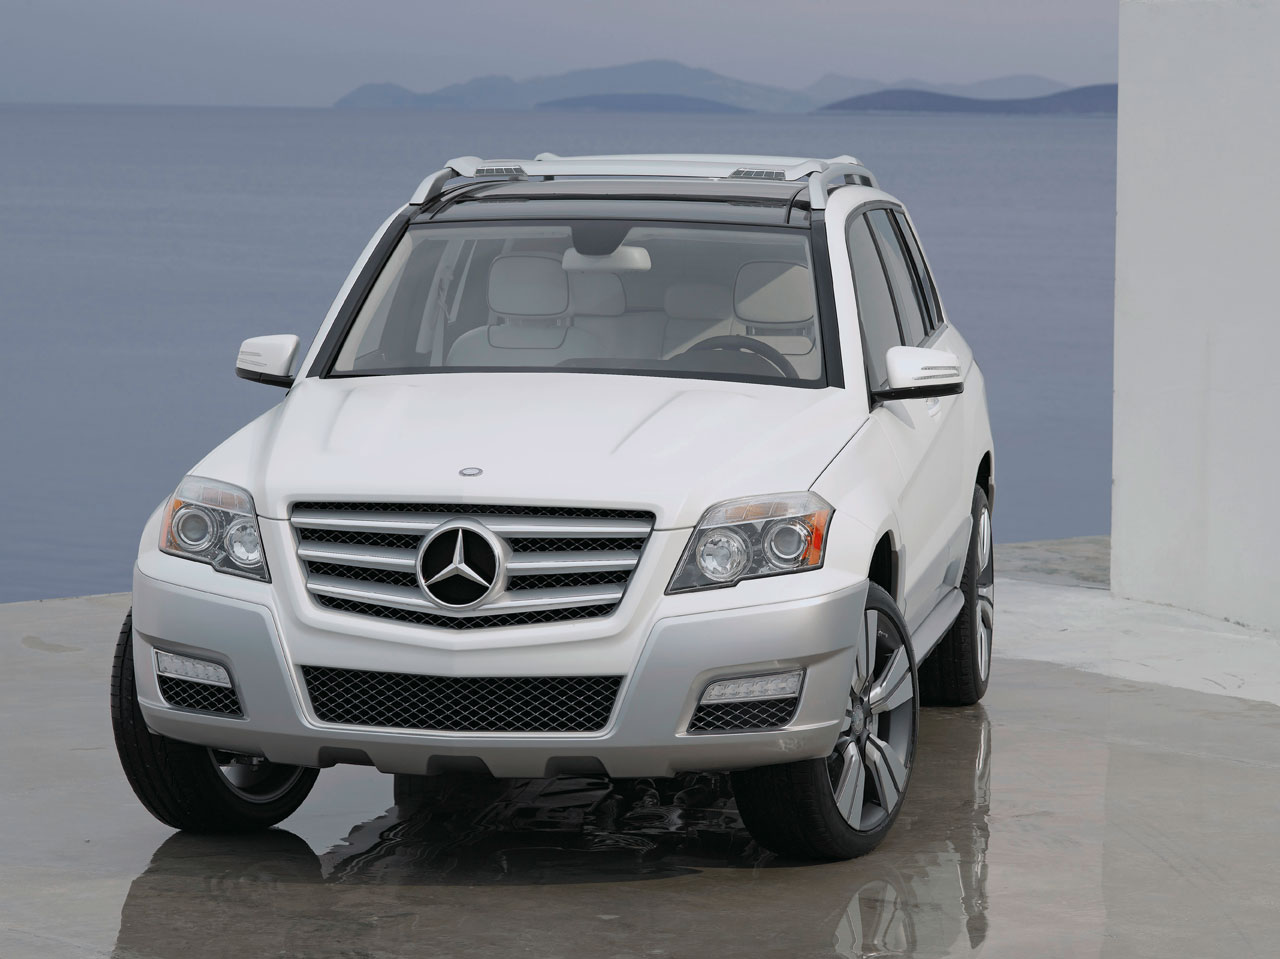 Mercedes-Benz Vision GLK Freeside, 2008